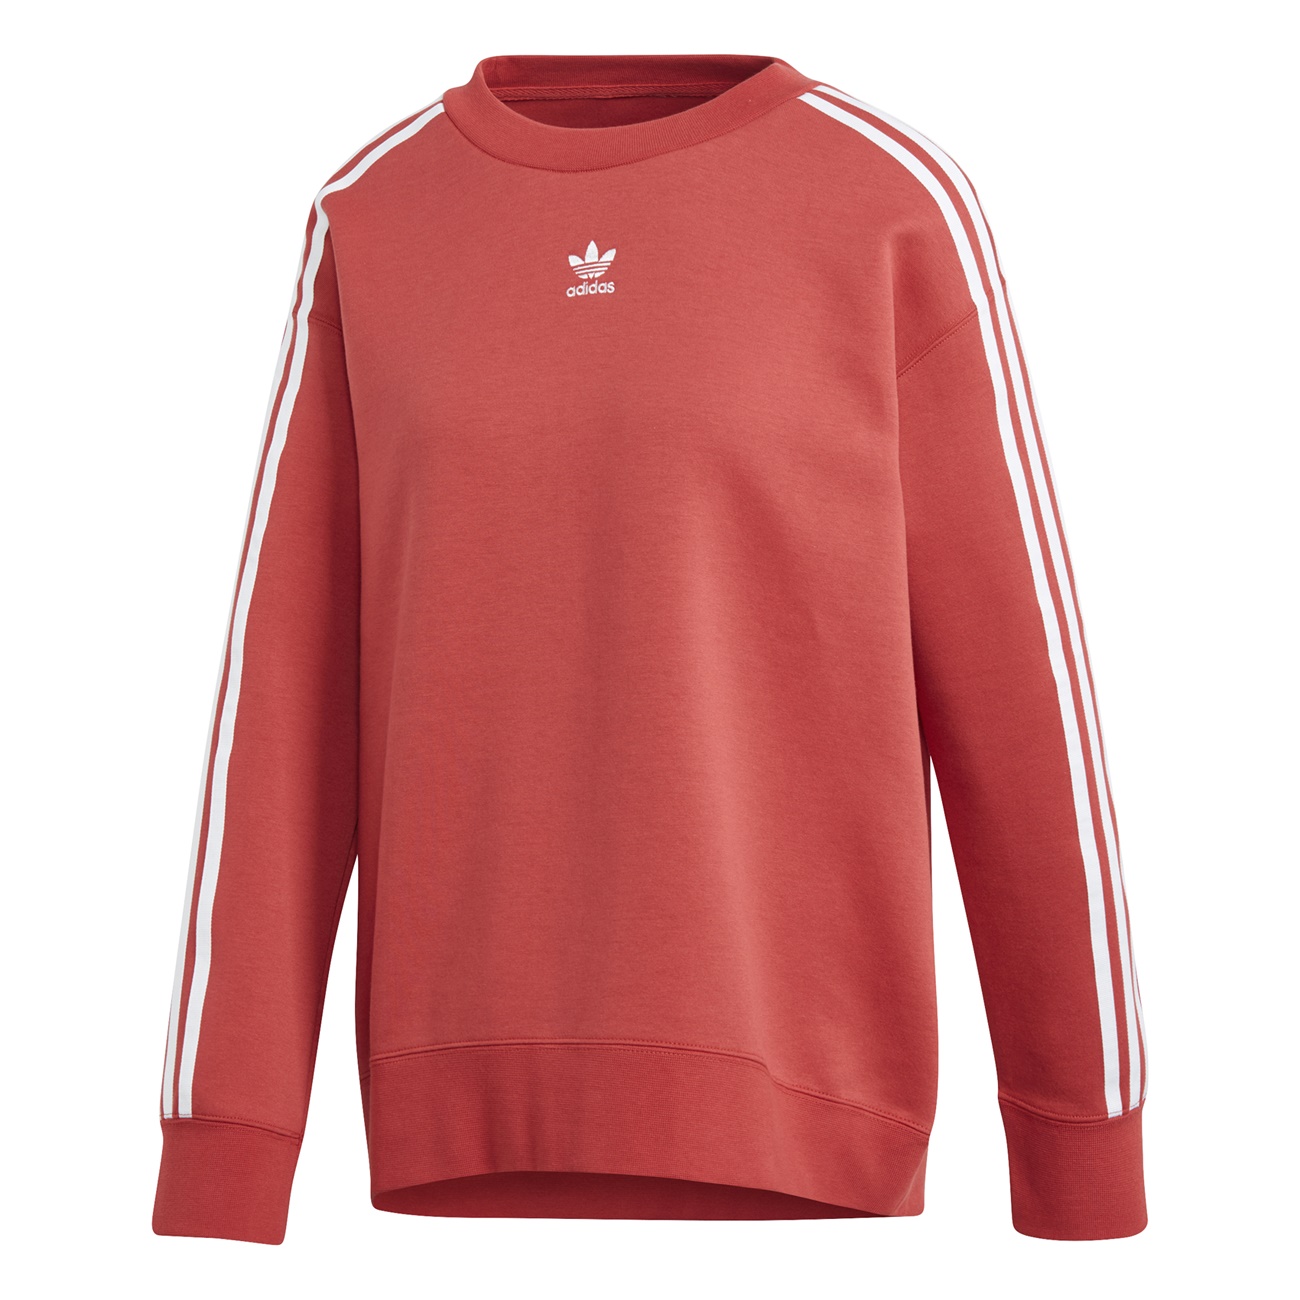 Adidas Originals Crew Sweater W (Raw manelsanchez.com